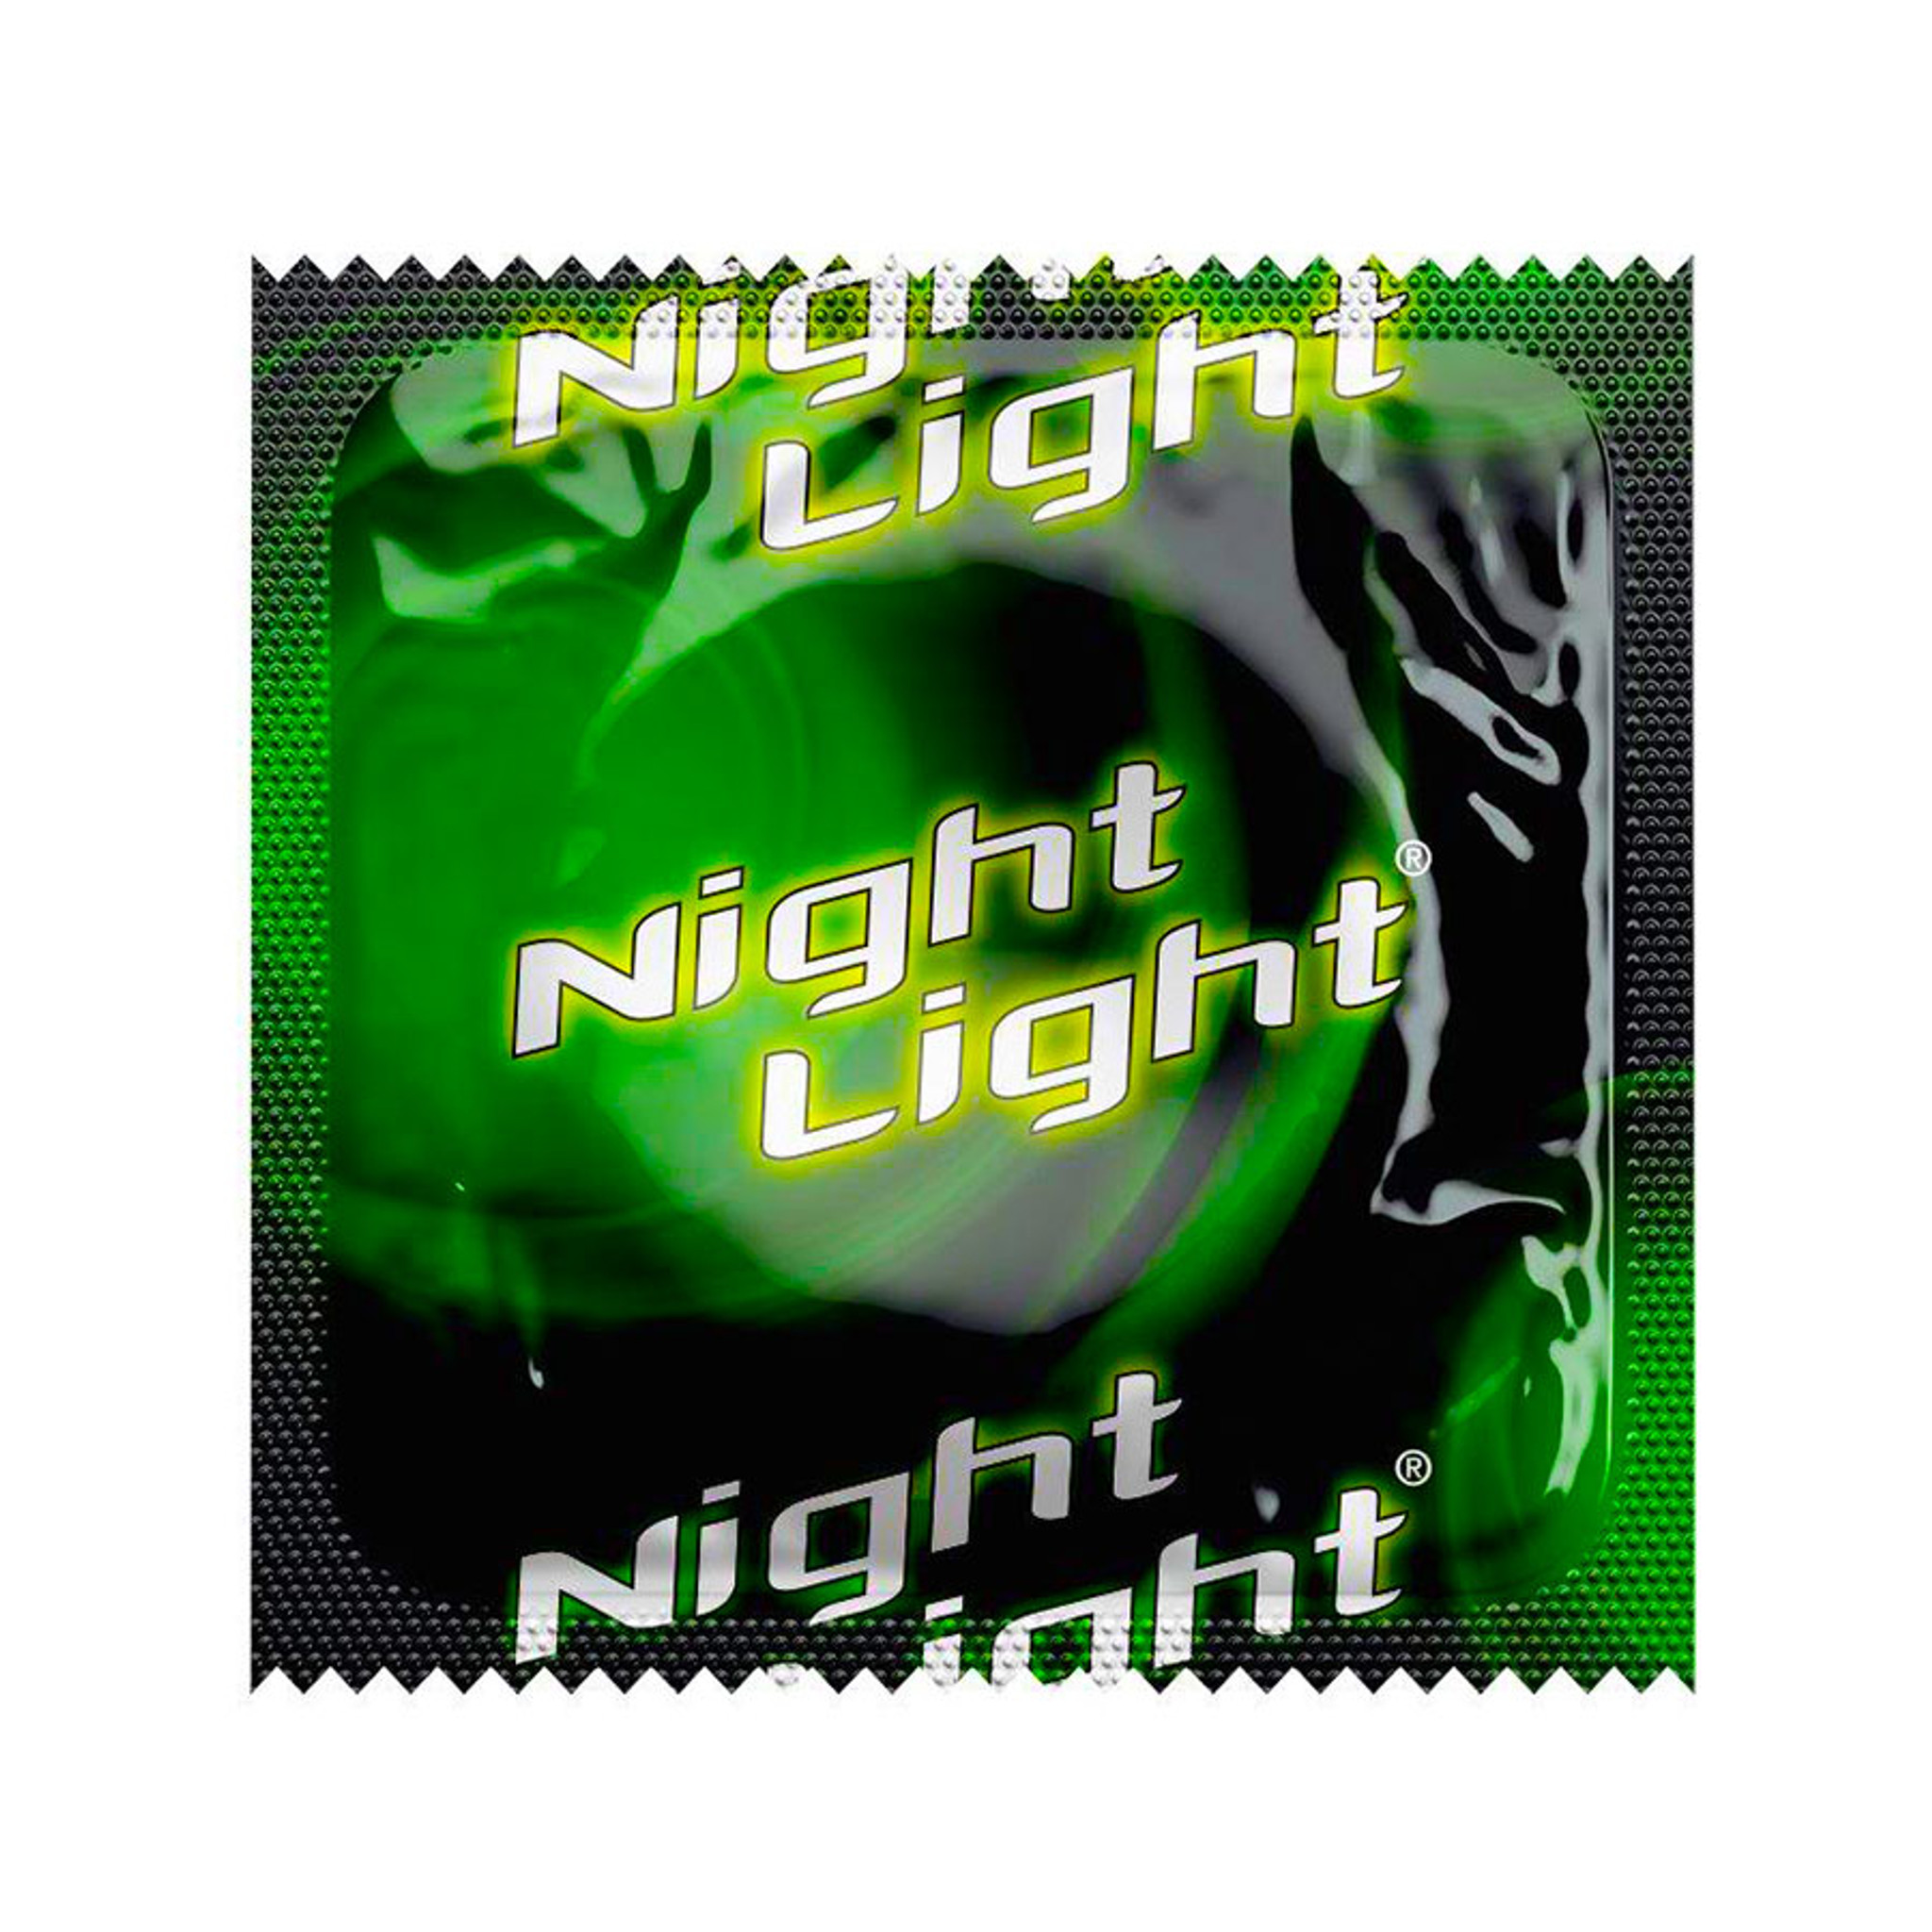 Night Light Front  61755.1600150882 ?c=2